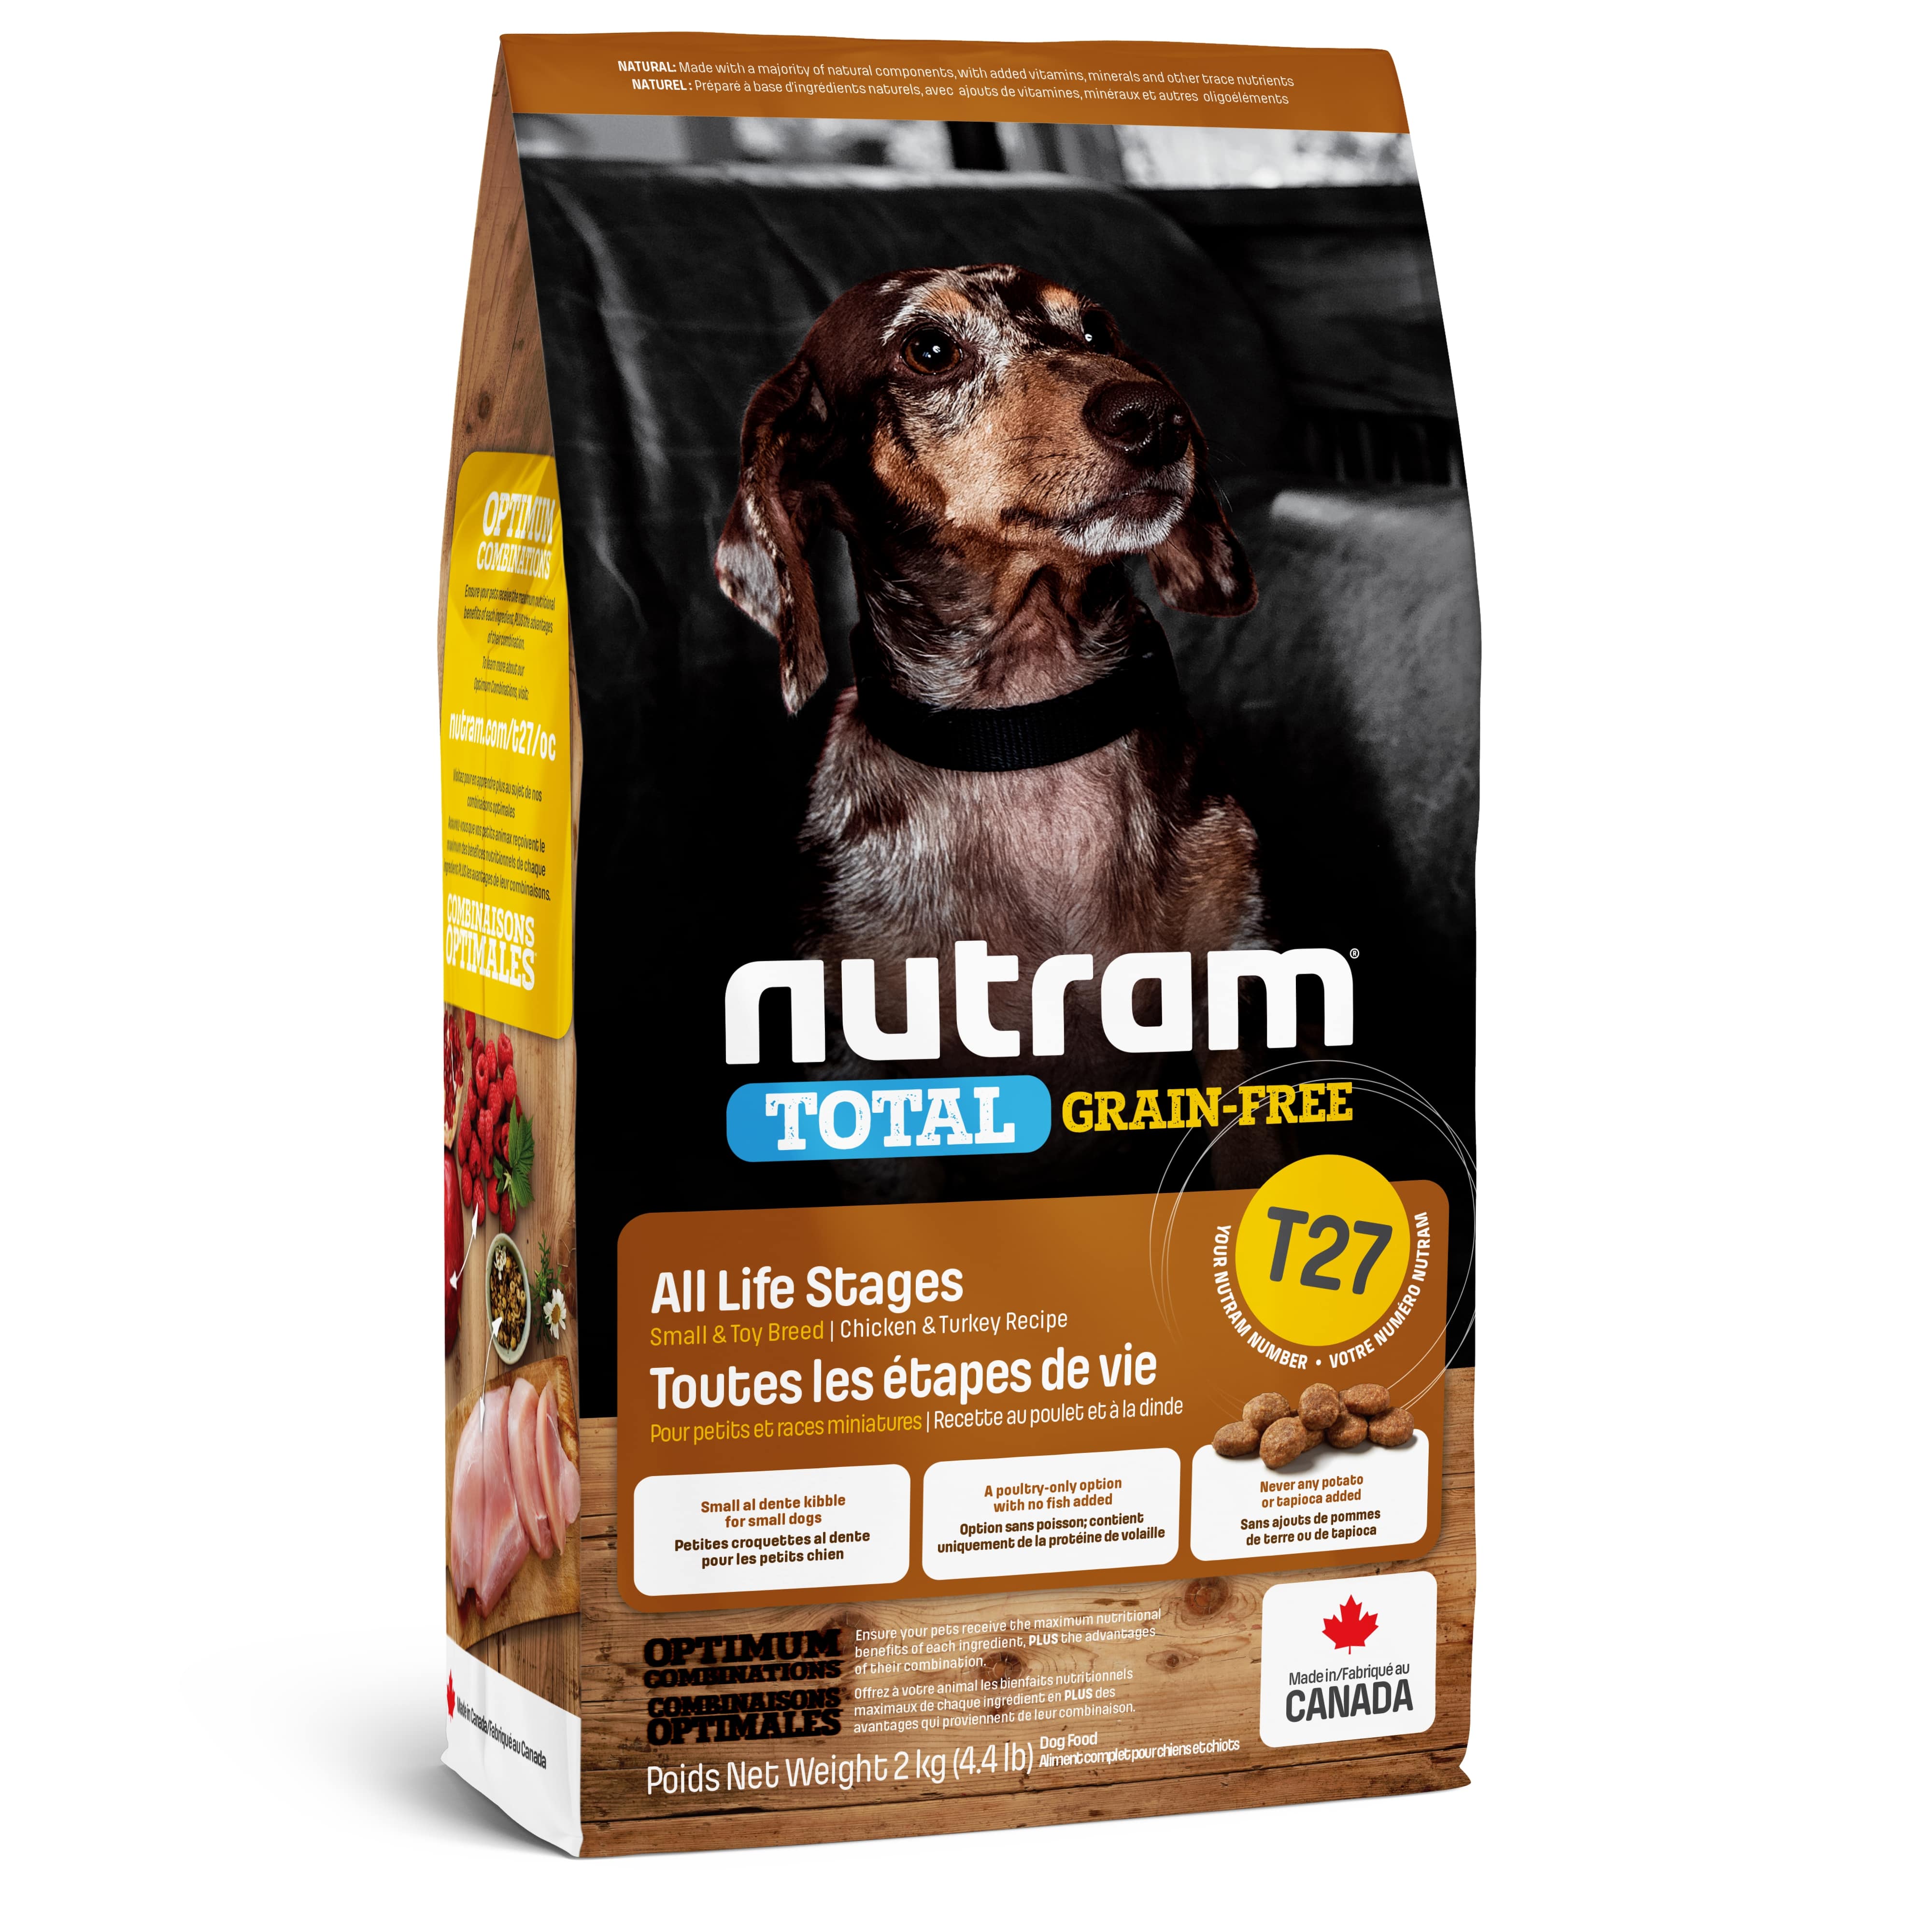 T27 Nutram Total Grain-Free® Turkey & Chiken Small Breed Dog Food